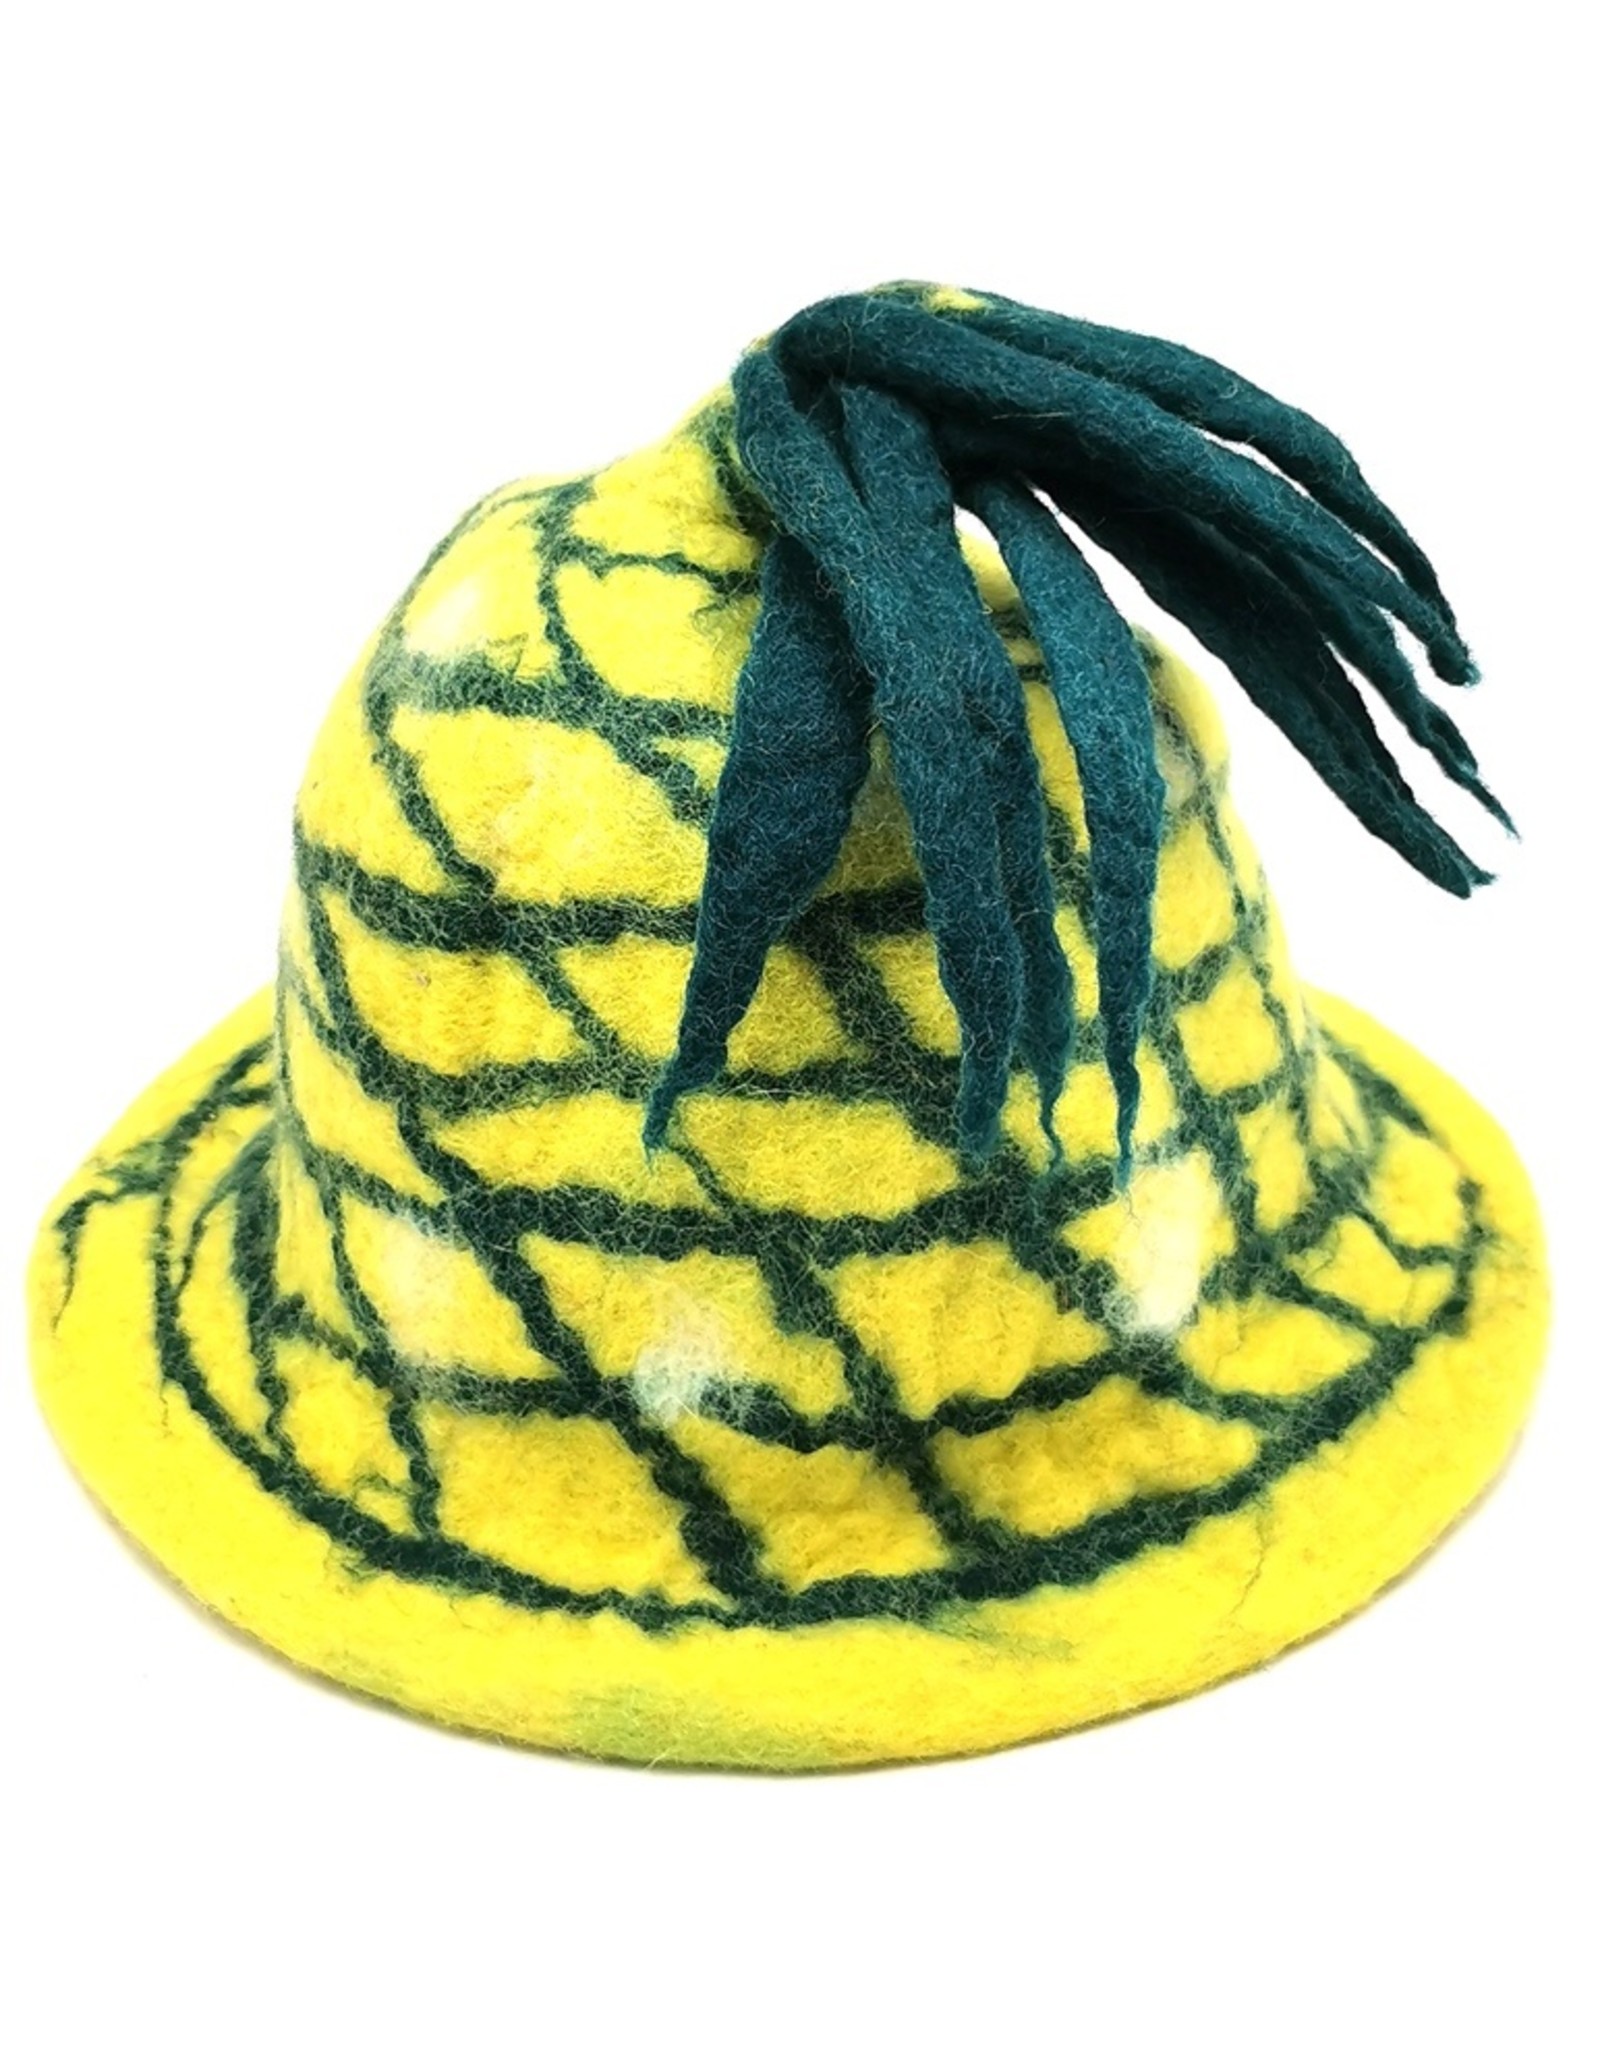 Trukado Miscellaneous - Felt hat "Pineapple" hand felted 100% wool